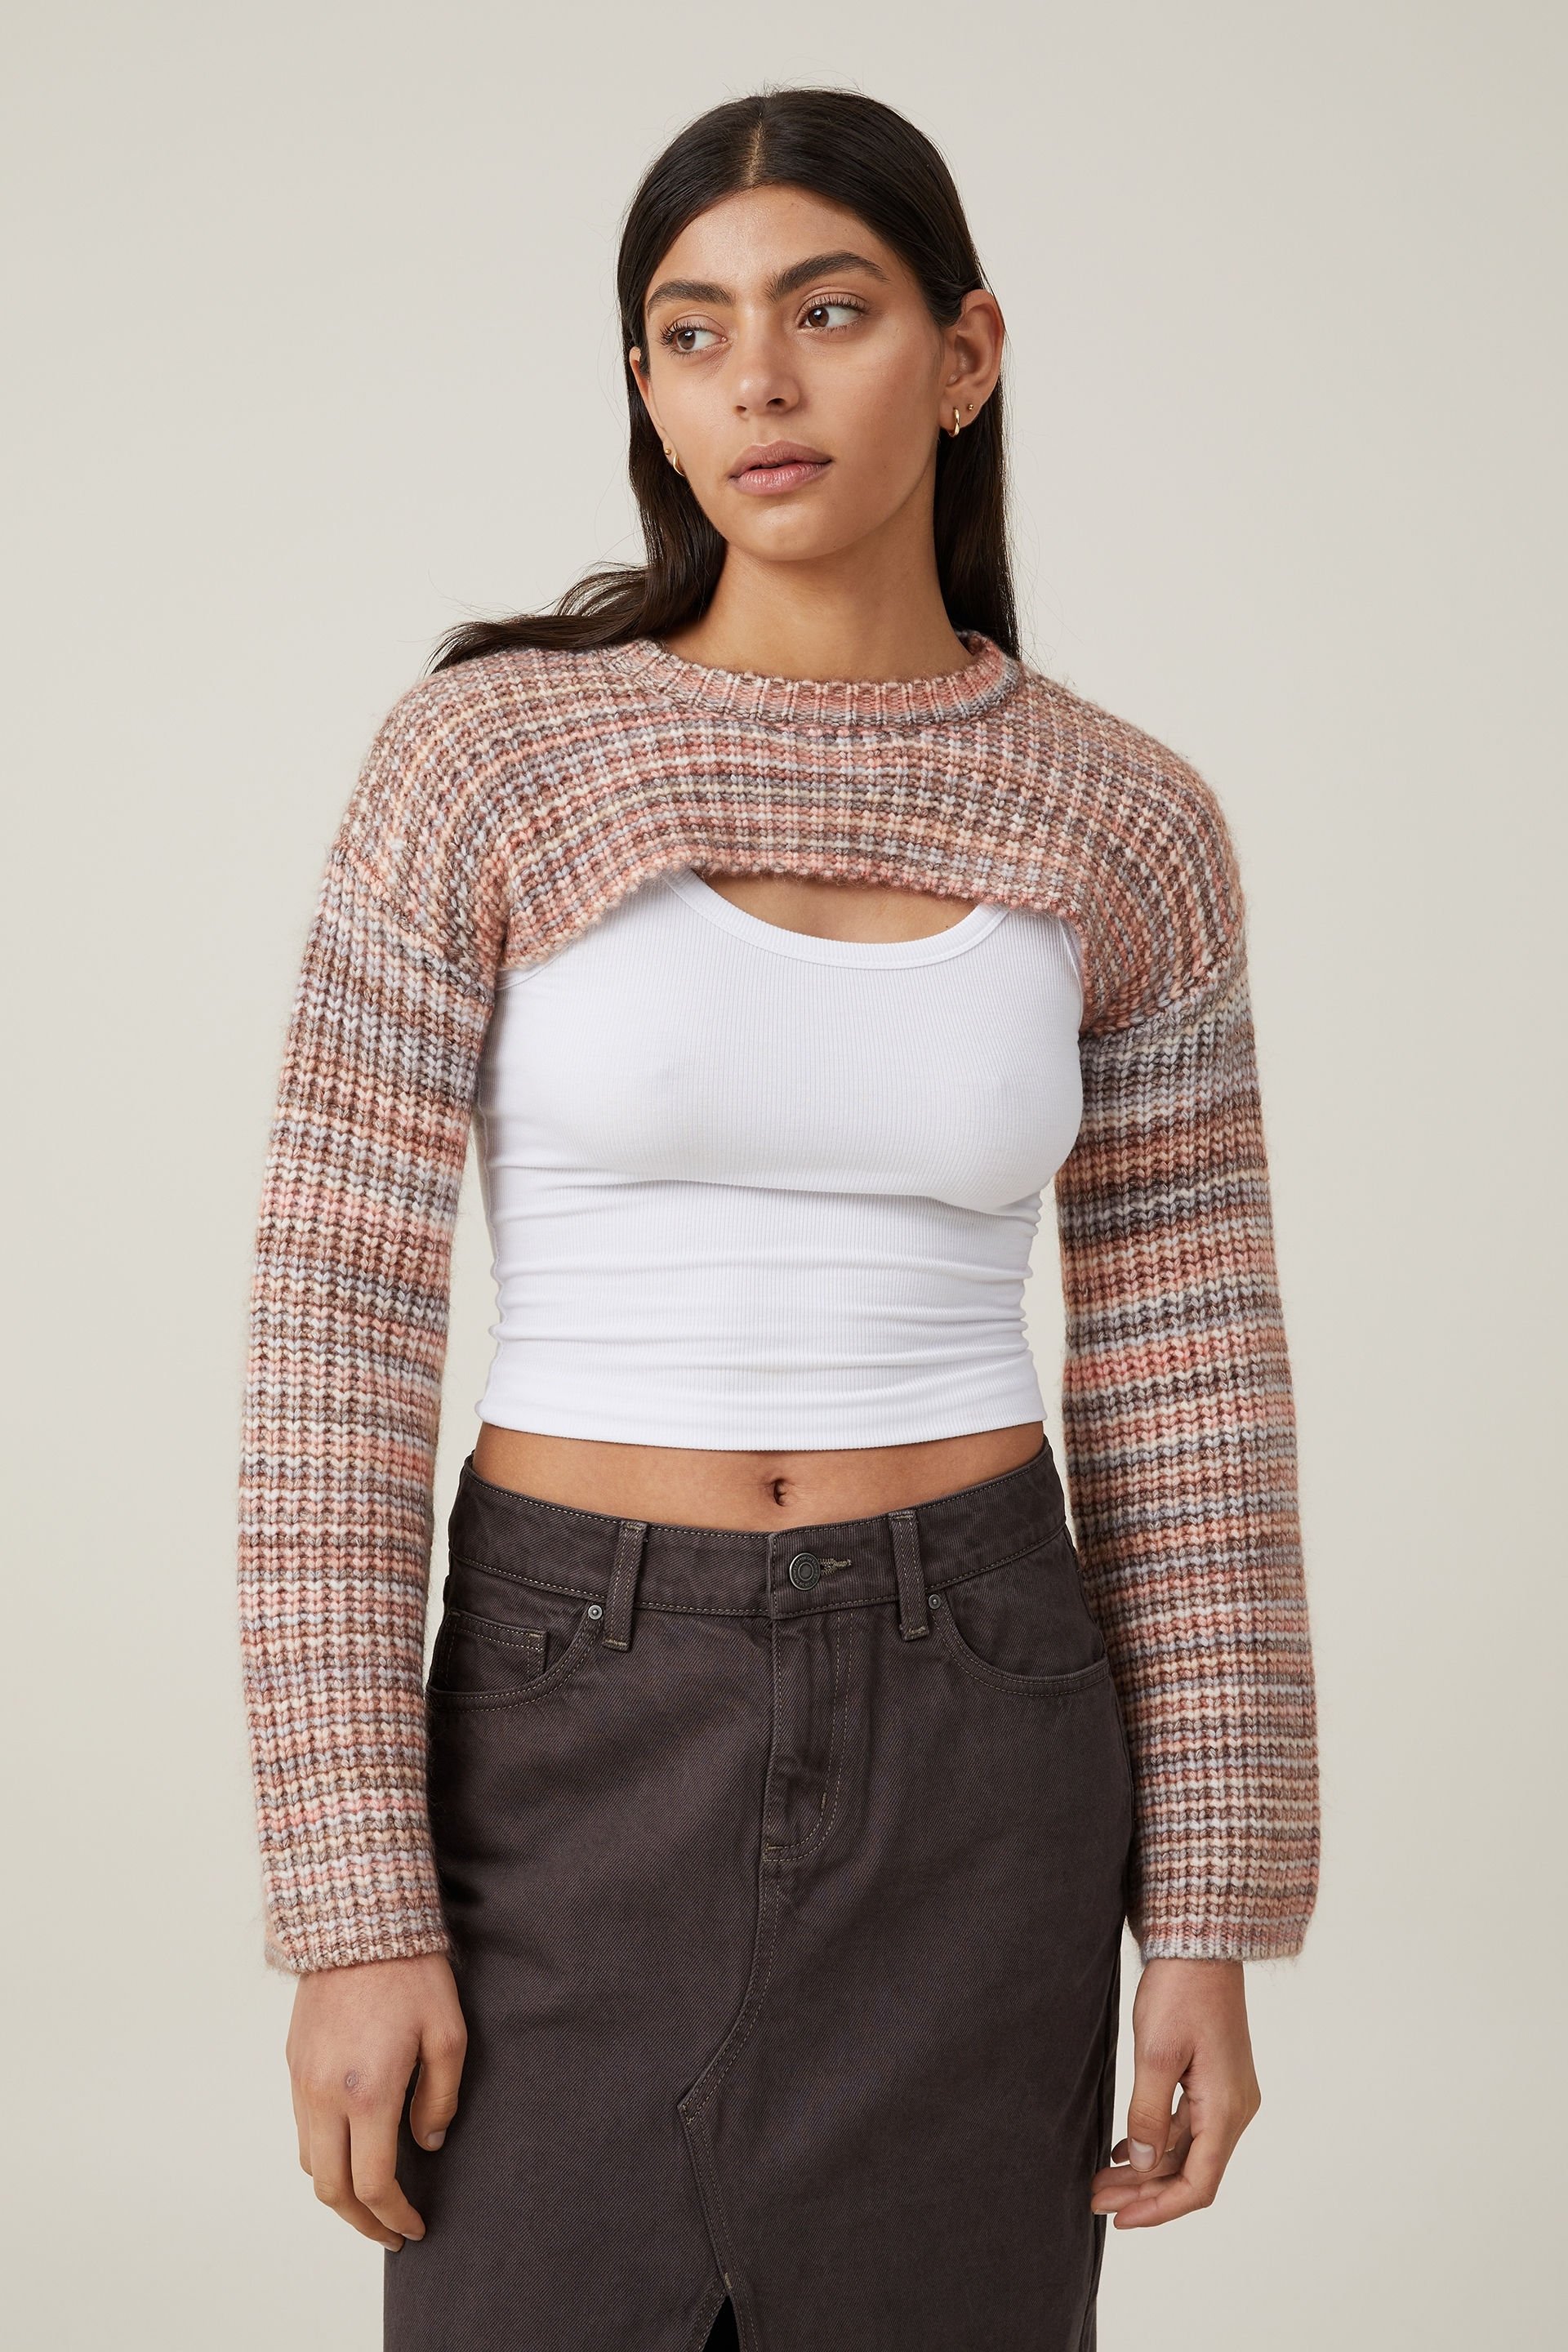 Cotton On Women - Shrug Crop Pullover - Neutral multi